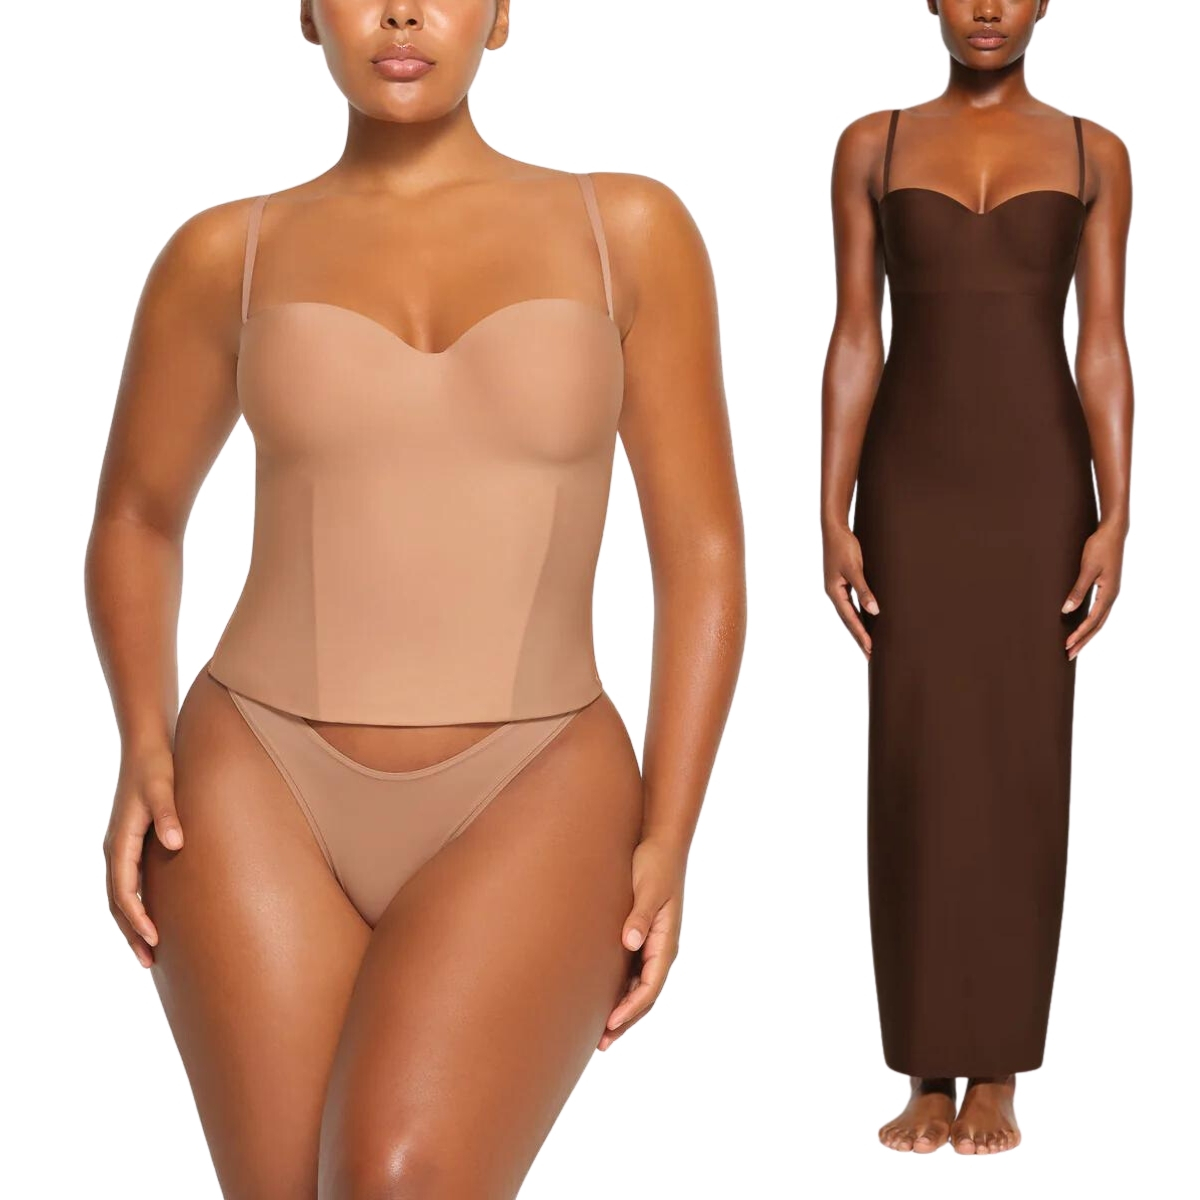 Kim Kardashian Models Her Comfy New Skims Clothing That Just Launched  Online!: Photo 4509603, Kim Kardashian, Shopping Photos